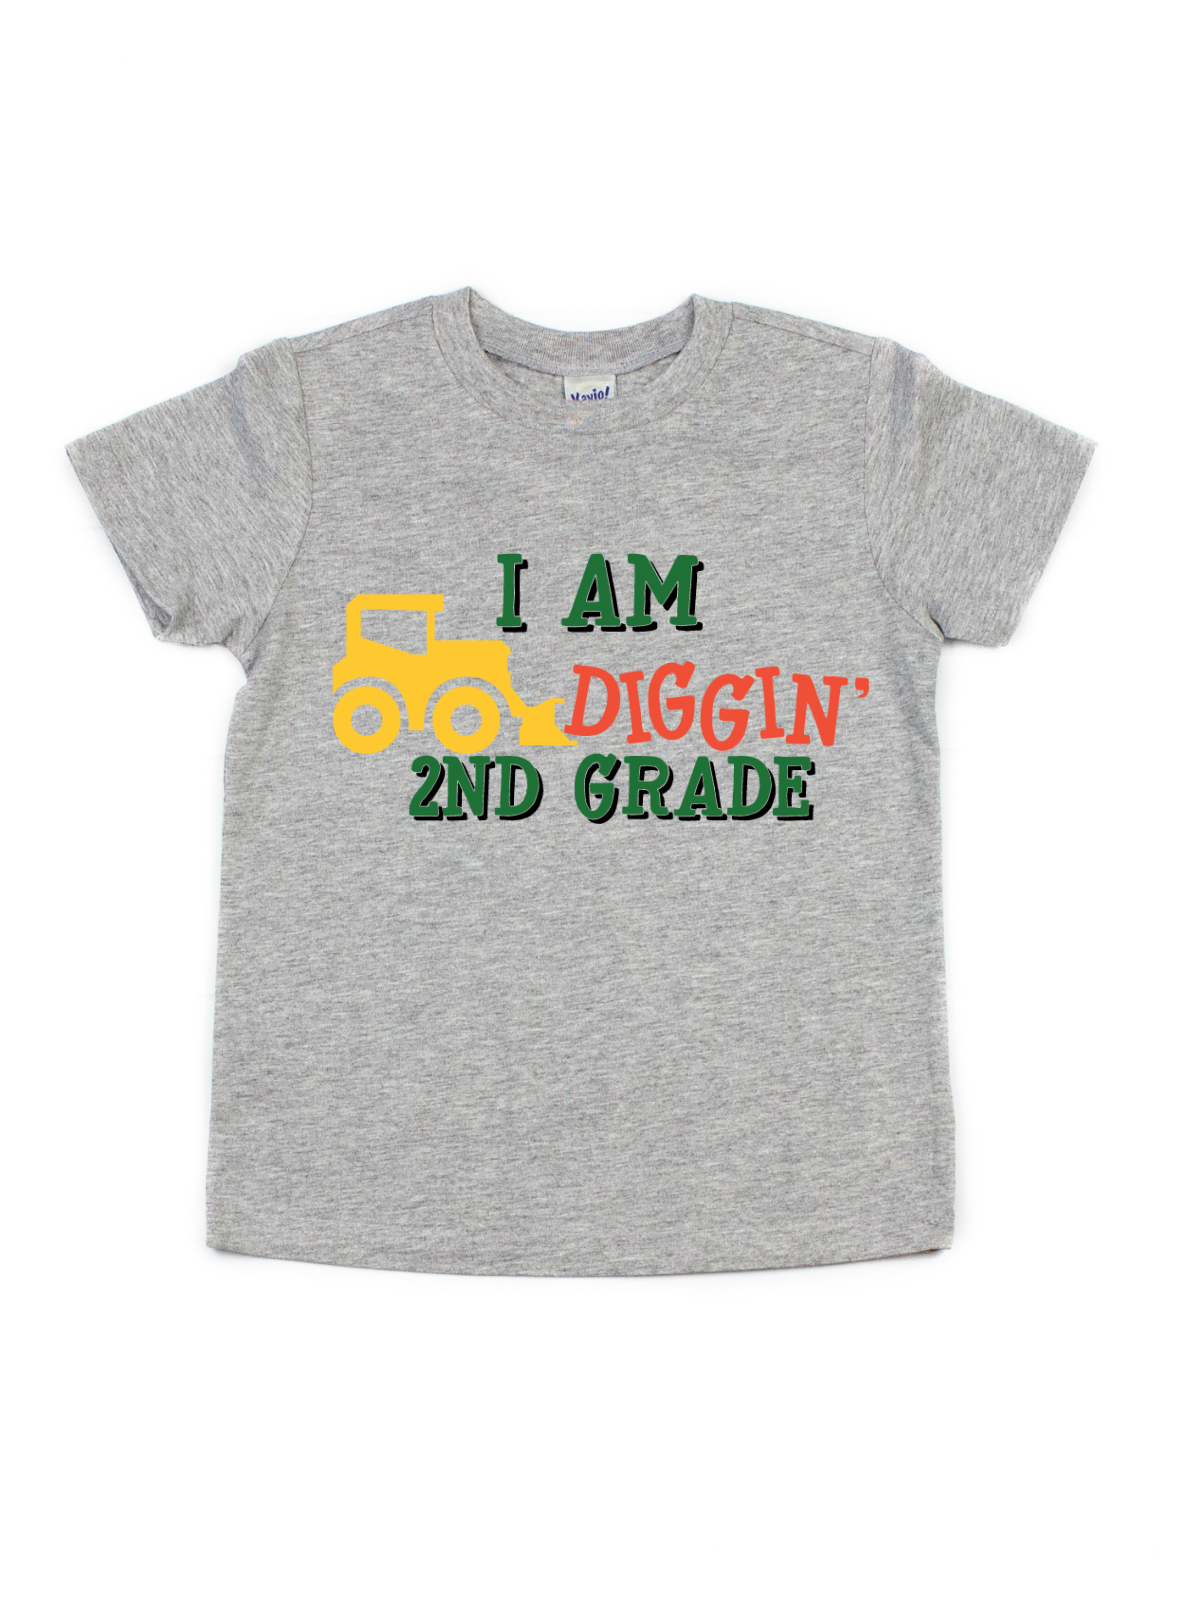 I am digging 2nd grade boys back to school shirt